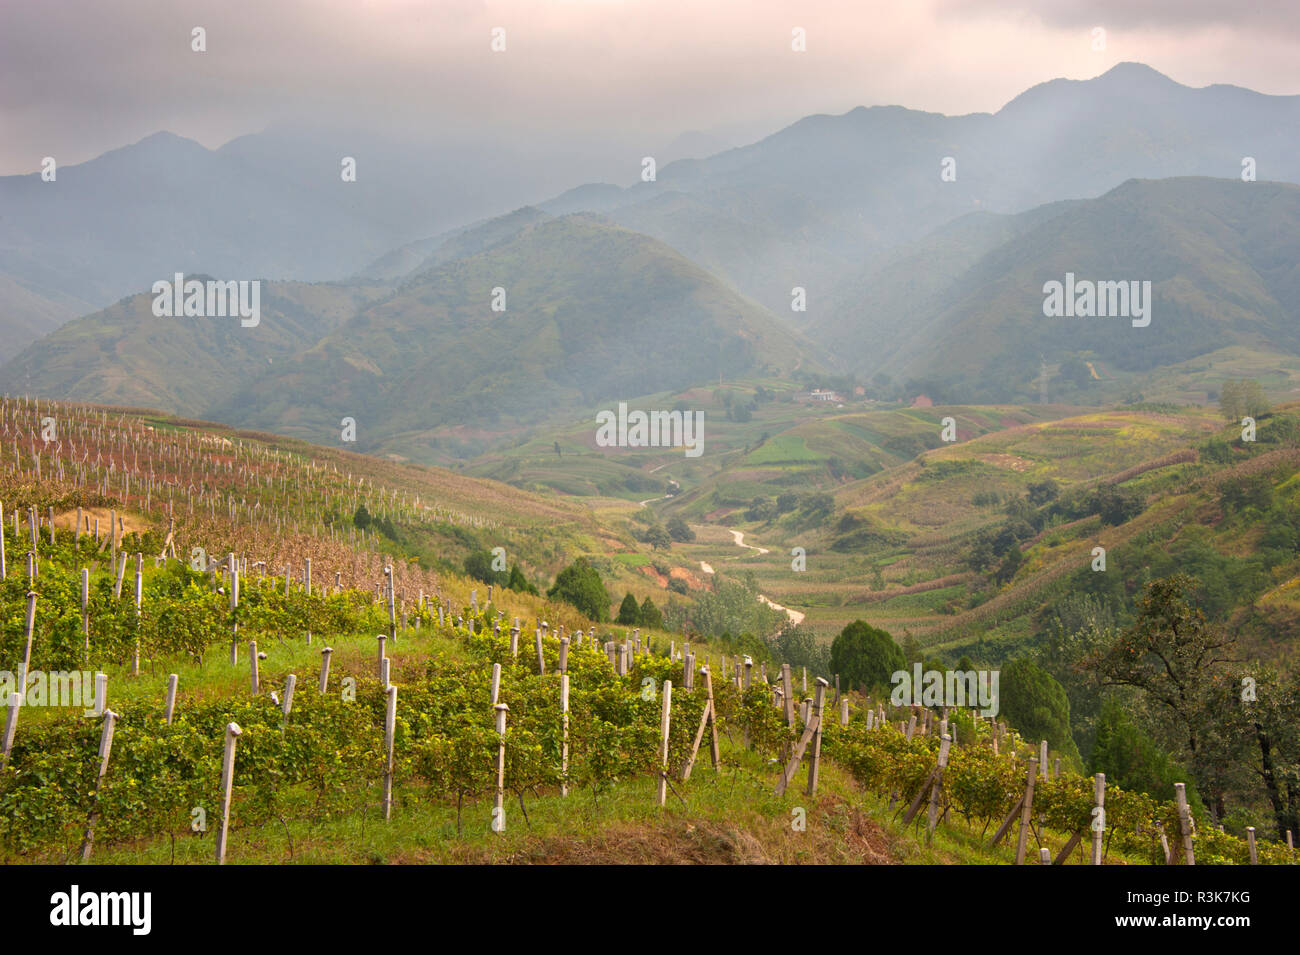 China, Shaanxi Province. Shaft of light hits Jade Valley Winery's Pinot Noir vineyard with Qinling Mountain range near Xian. Stock Photo